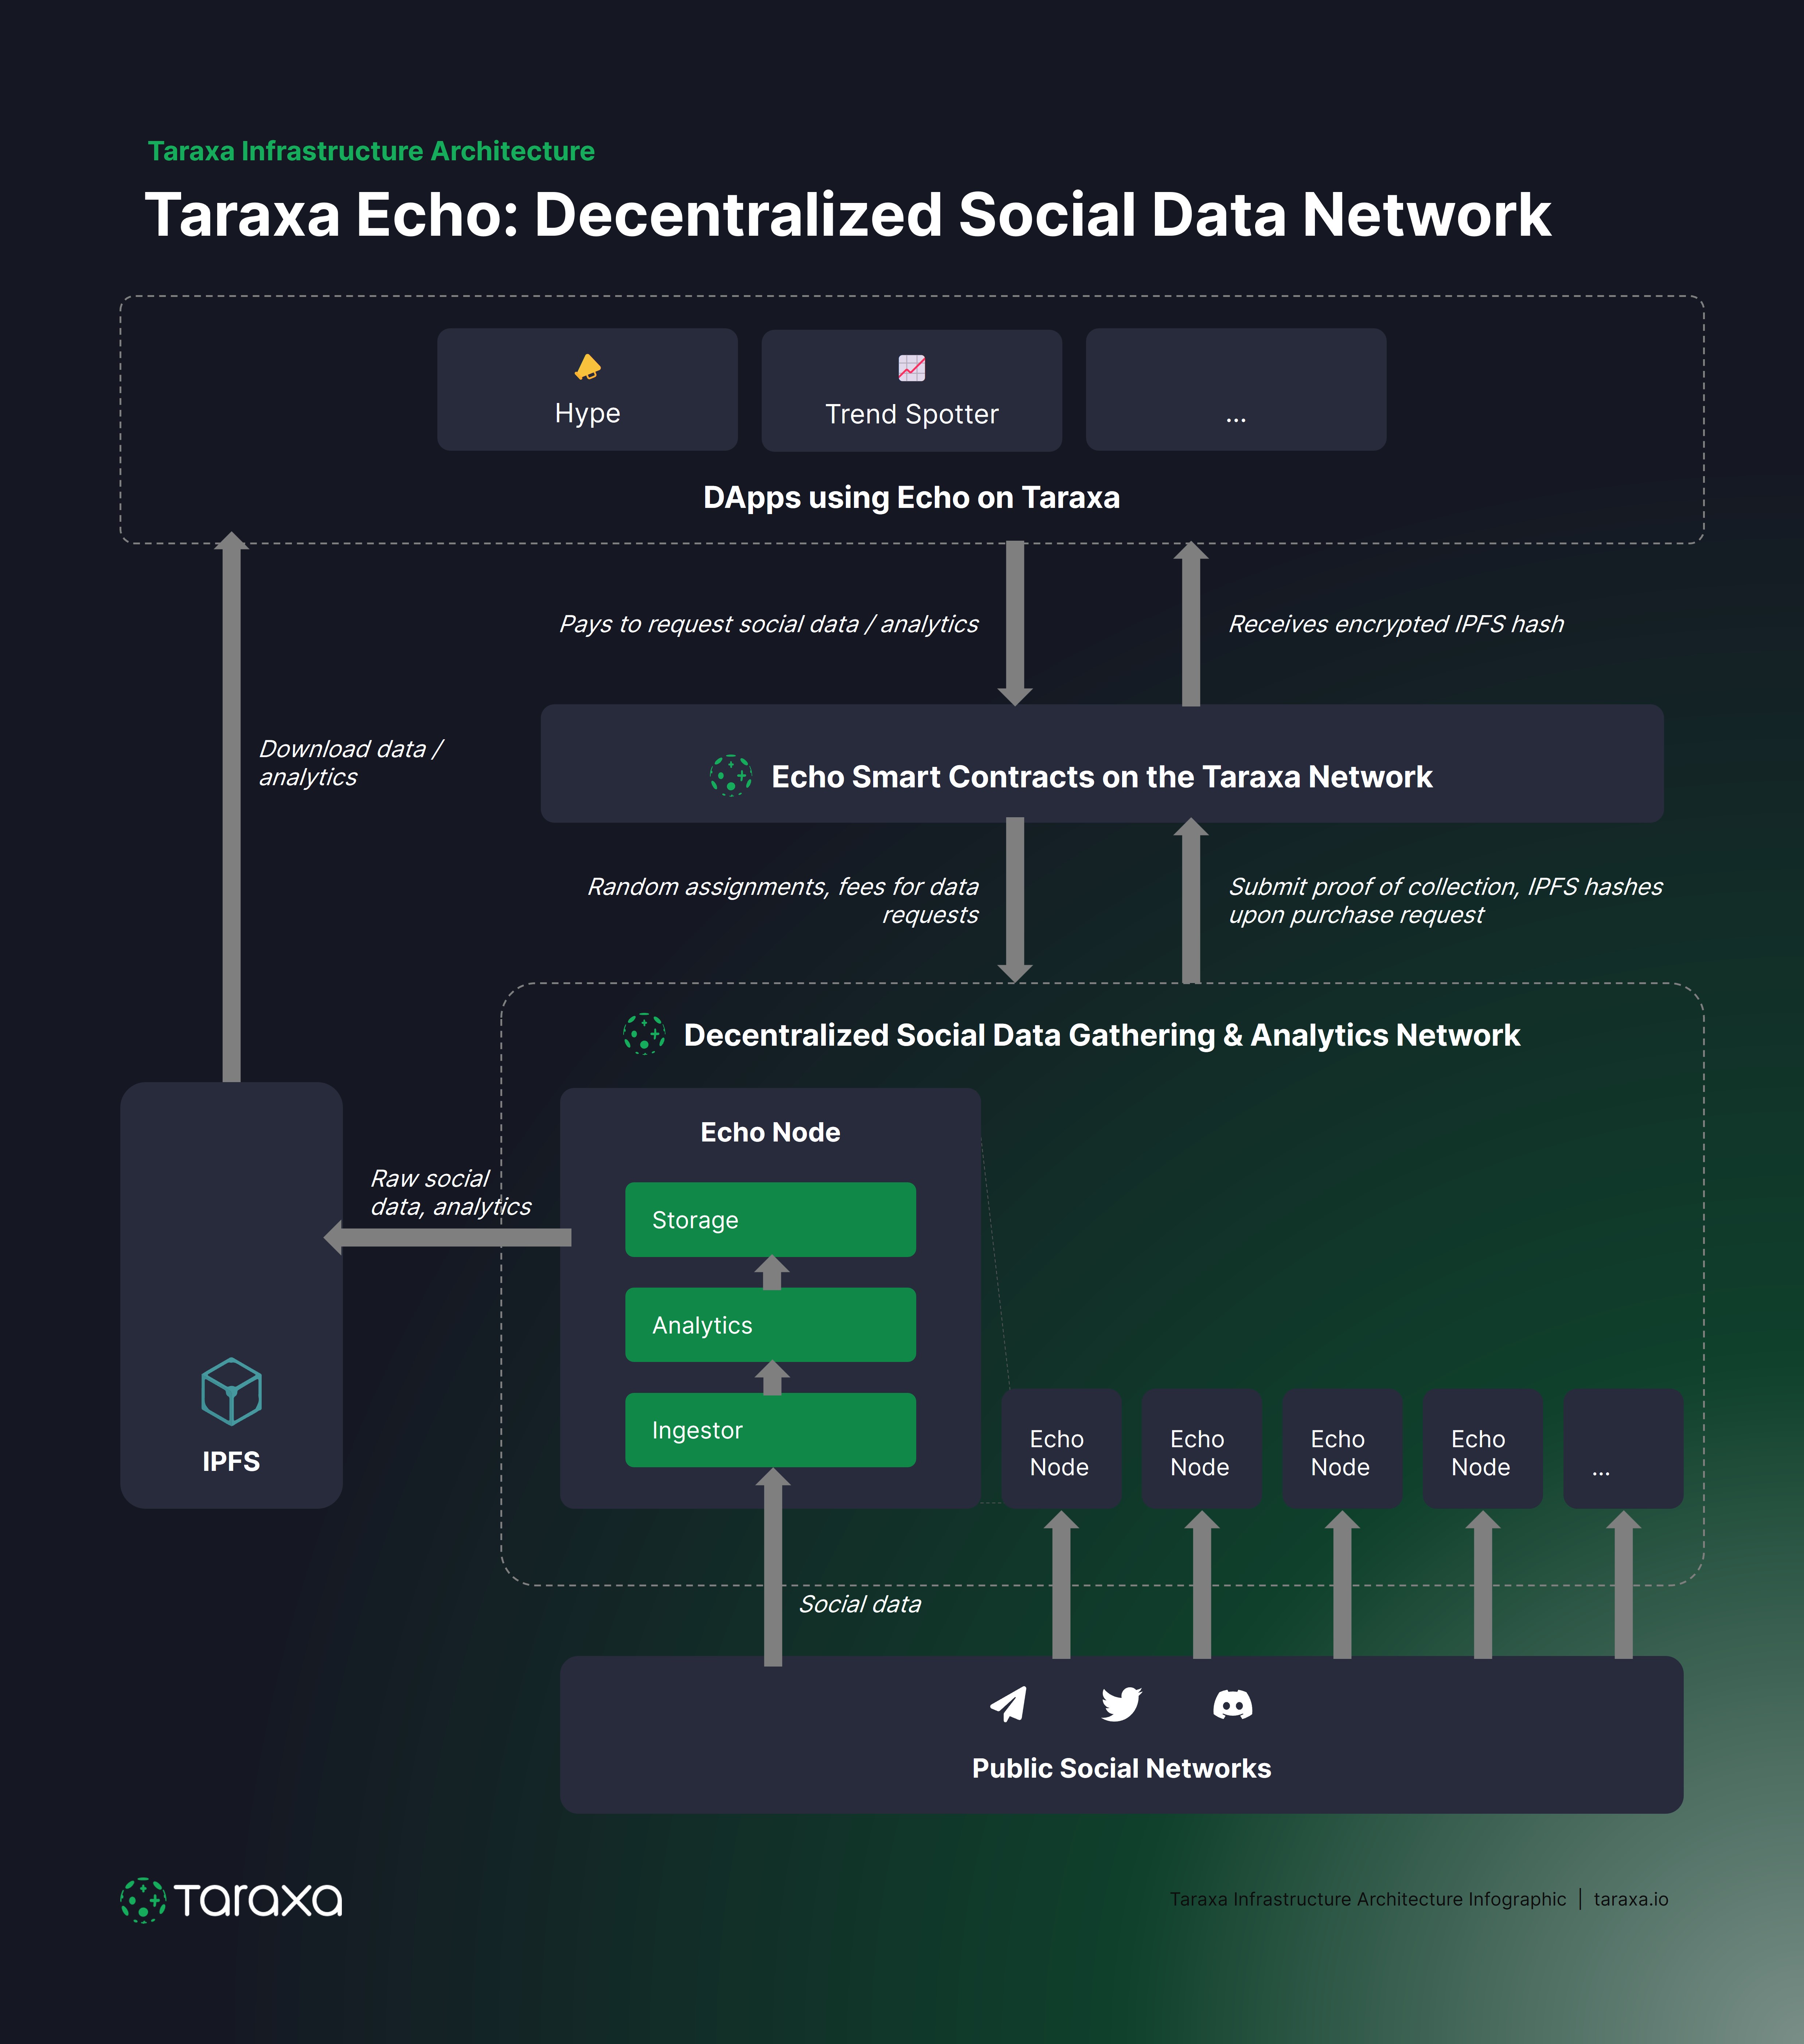 Taraxa Echo Infrastructure Infographic